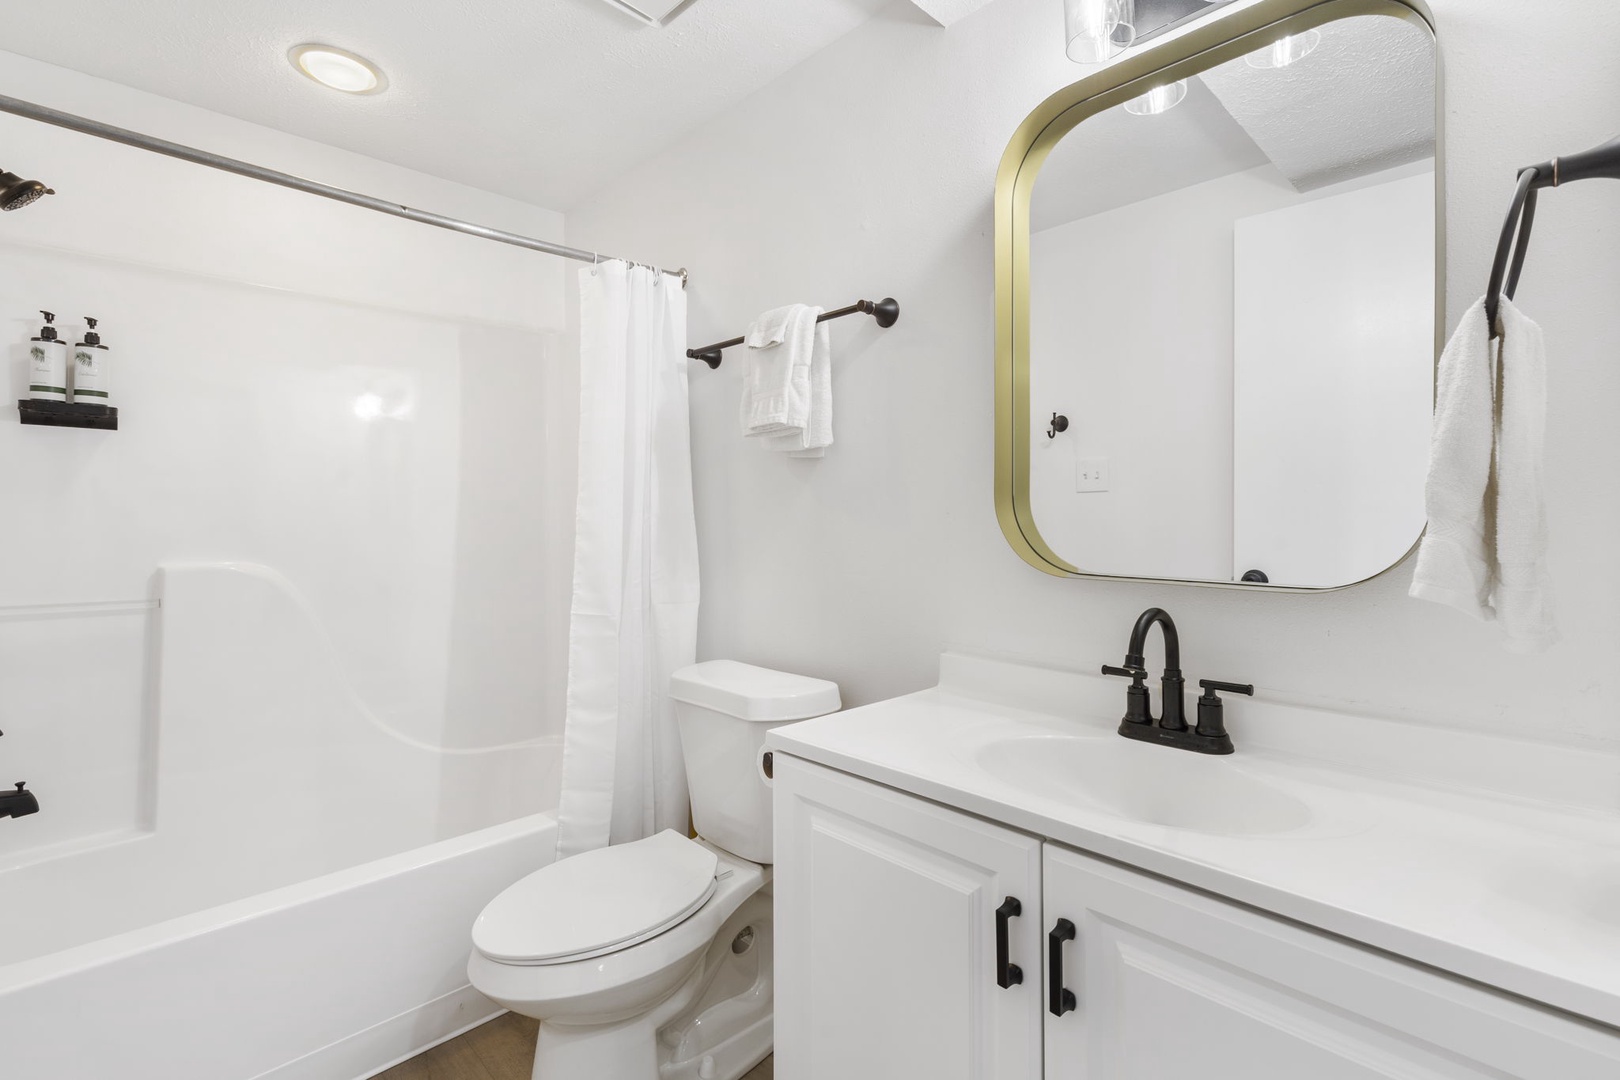 The 1st floor full bathroom includes a single vanity & shower/tub combo